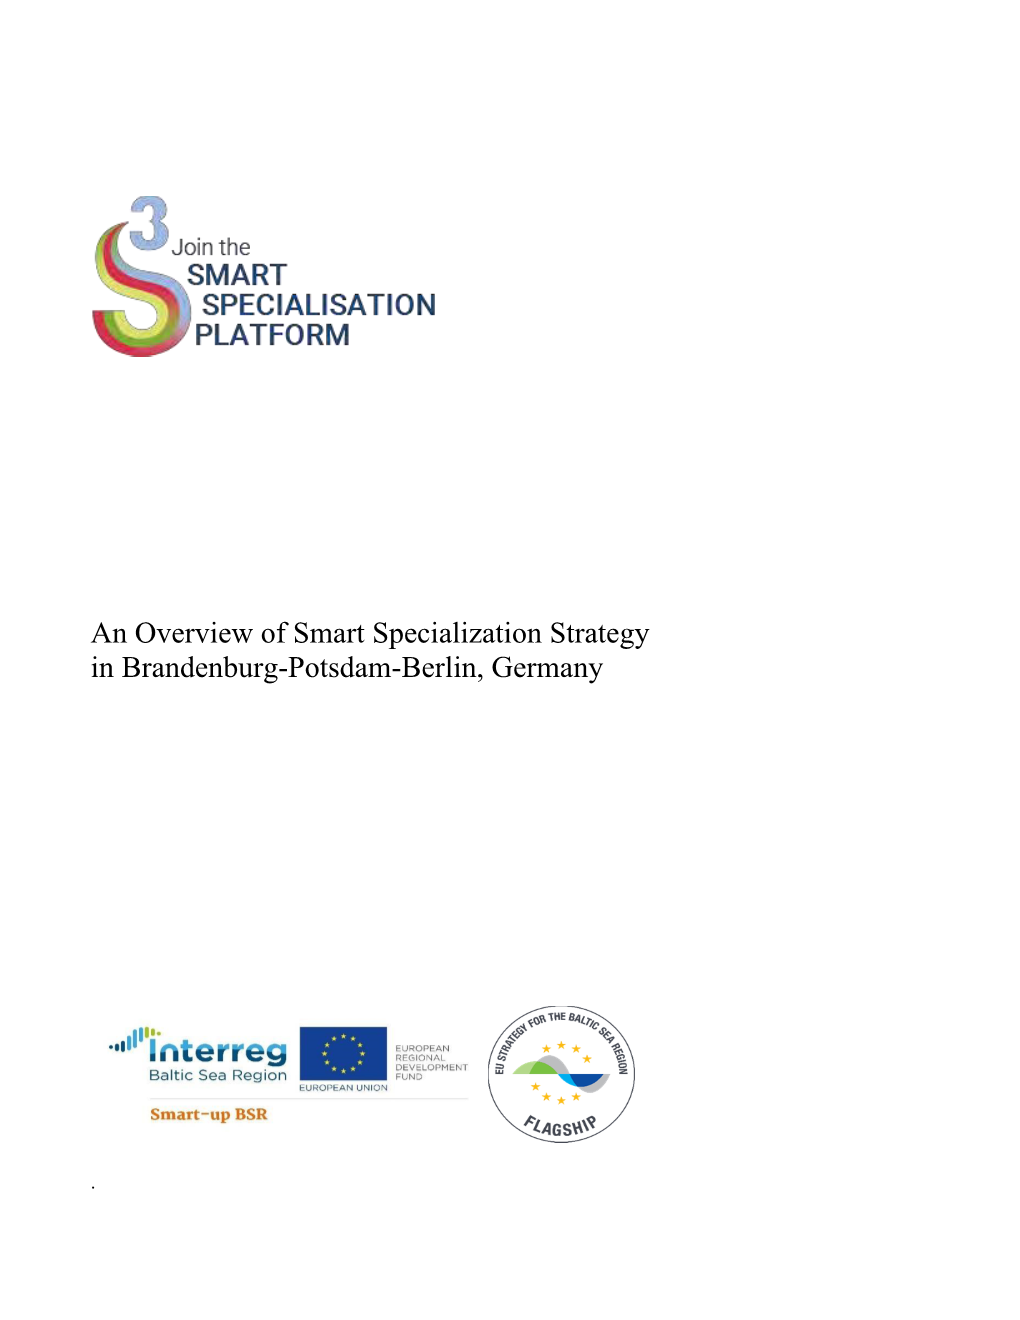 An Overview of Smart Specialization Strategy in Brandenburg-Potsdam-Berlin, Germany